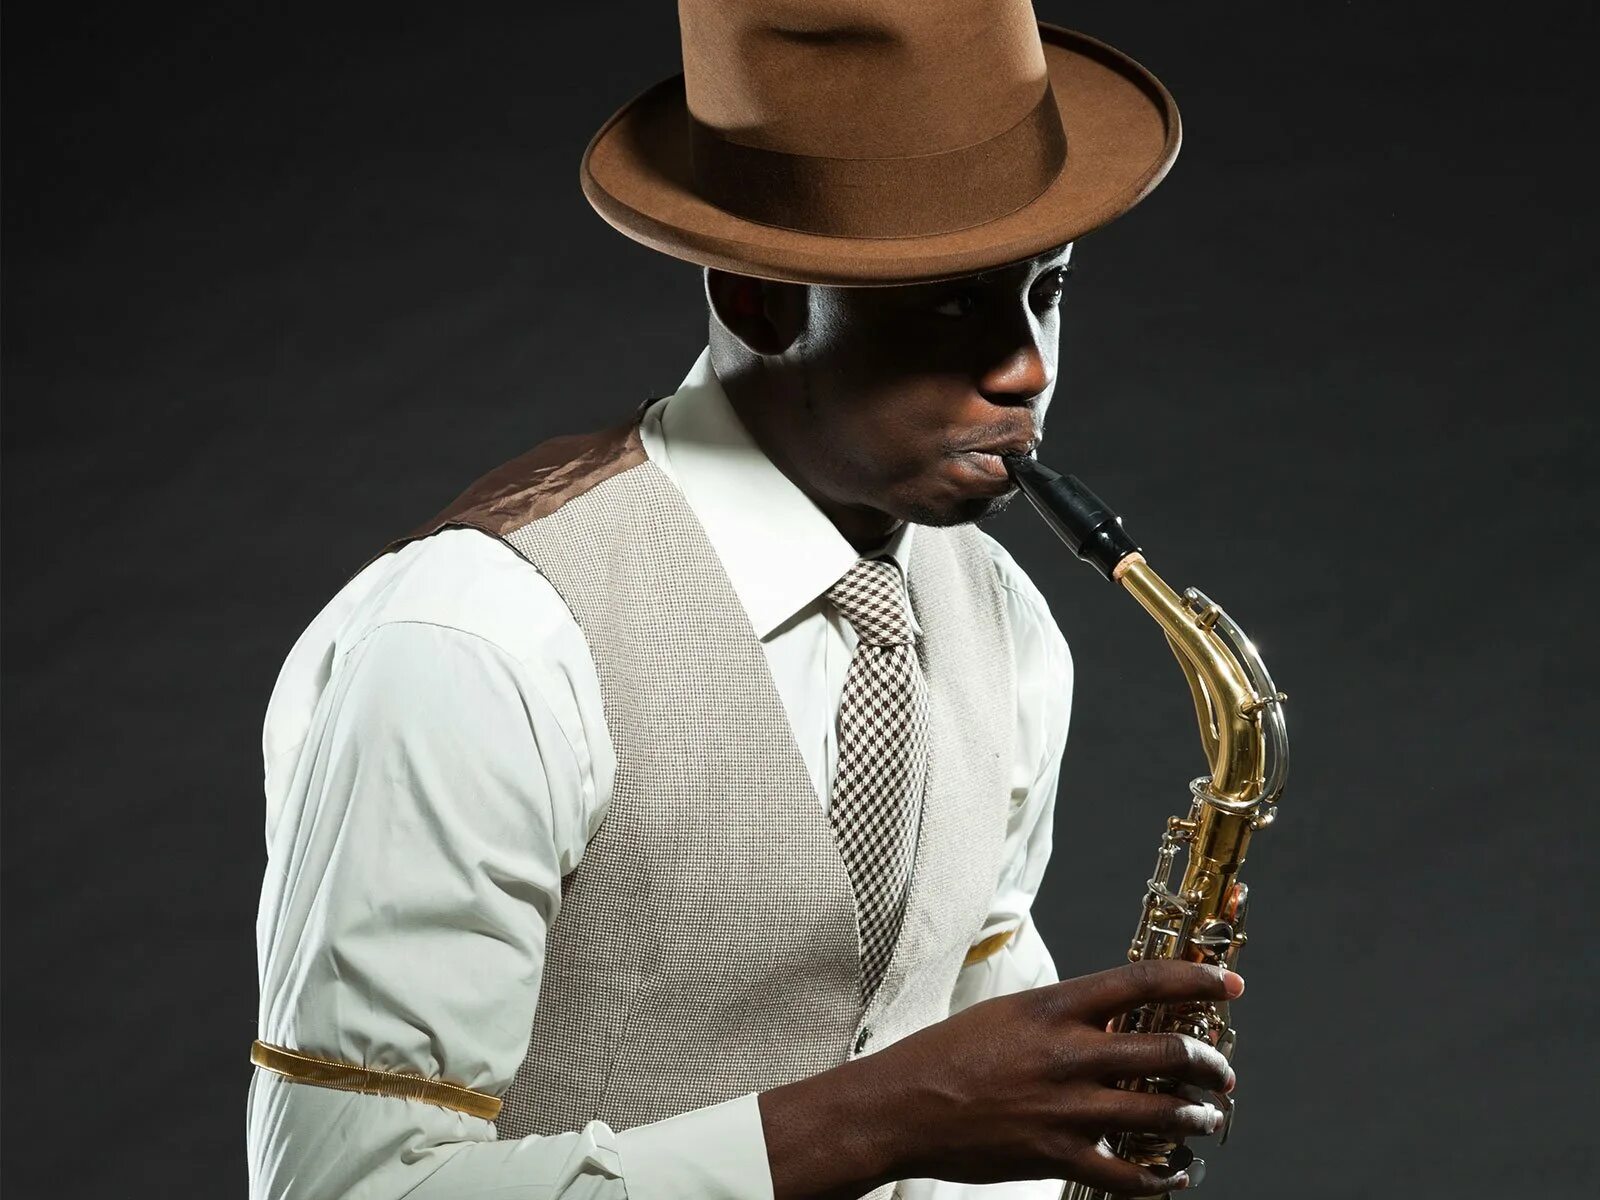 Джаз. Джазовые музыканты. Саксофонист джаз. Музыкант в шляпе.